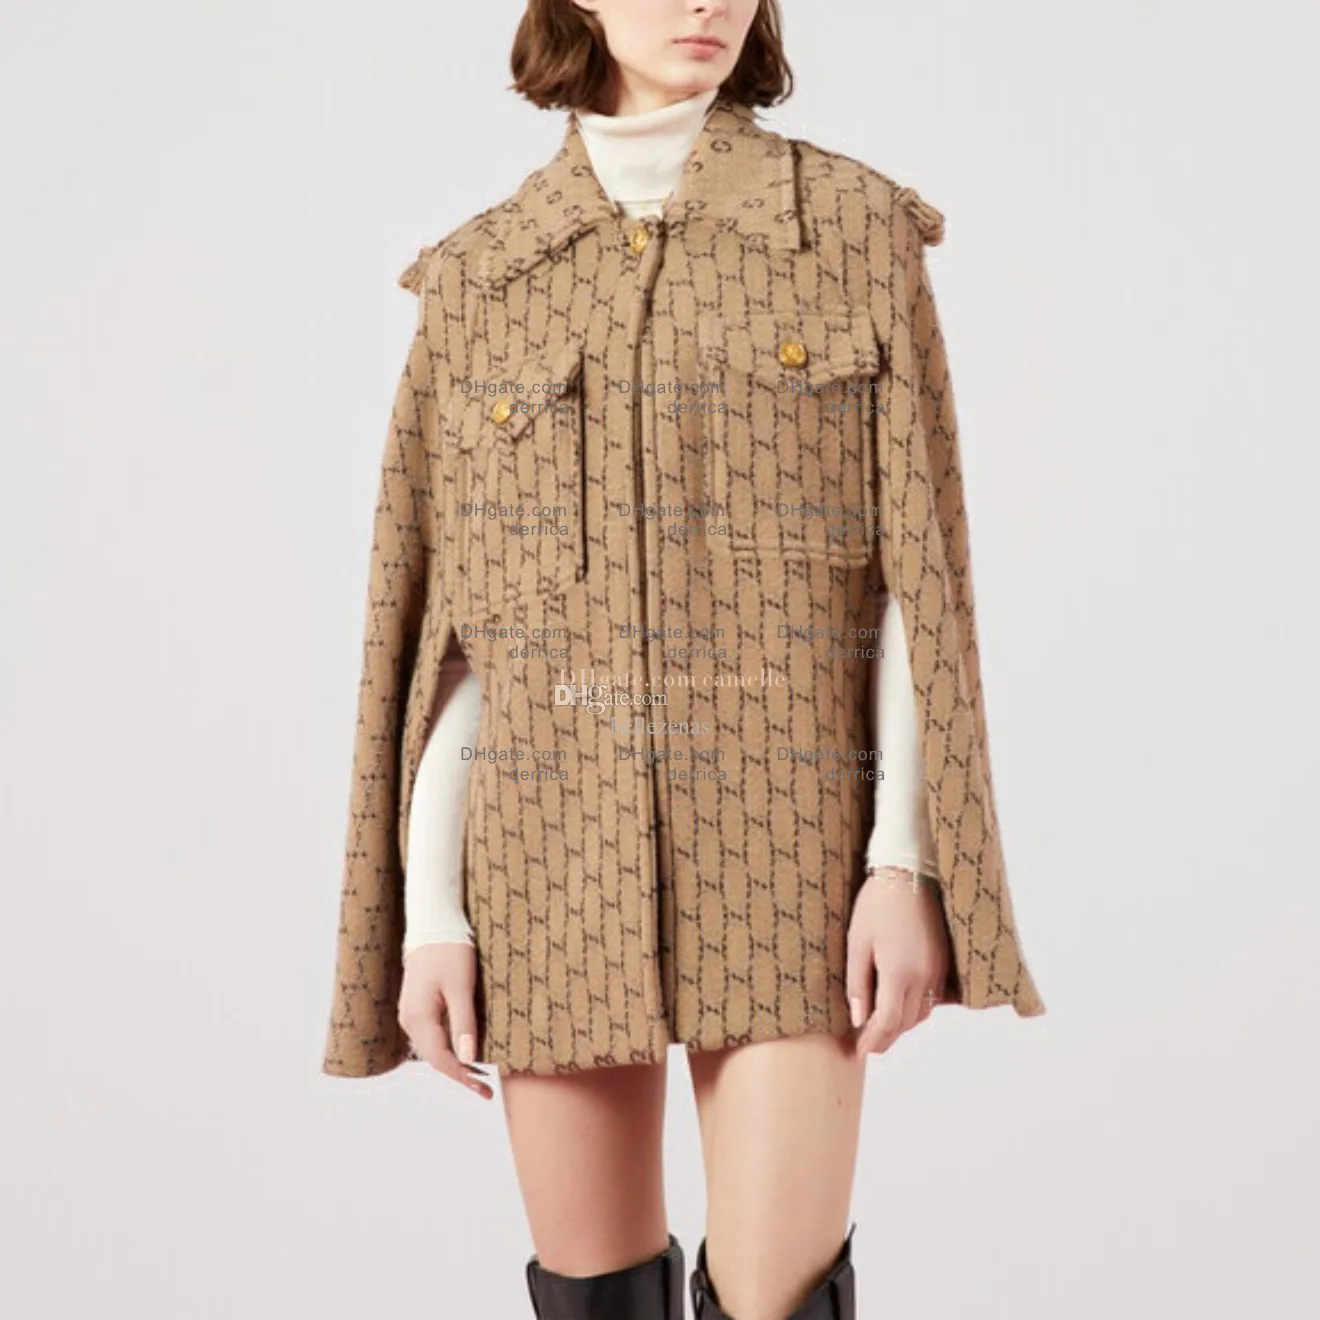 Designer mulheres capa boutique trench coat com capuz túnica jaquetas de mangas compridas roupas de inverno casacos temperamento outerwear xale natal plus size sobretudo